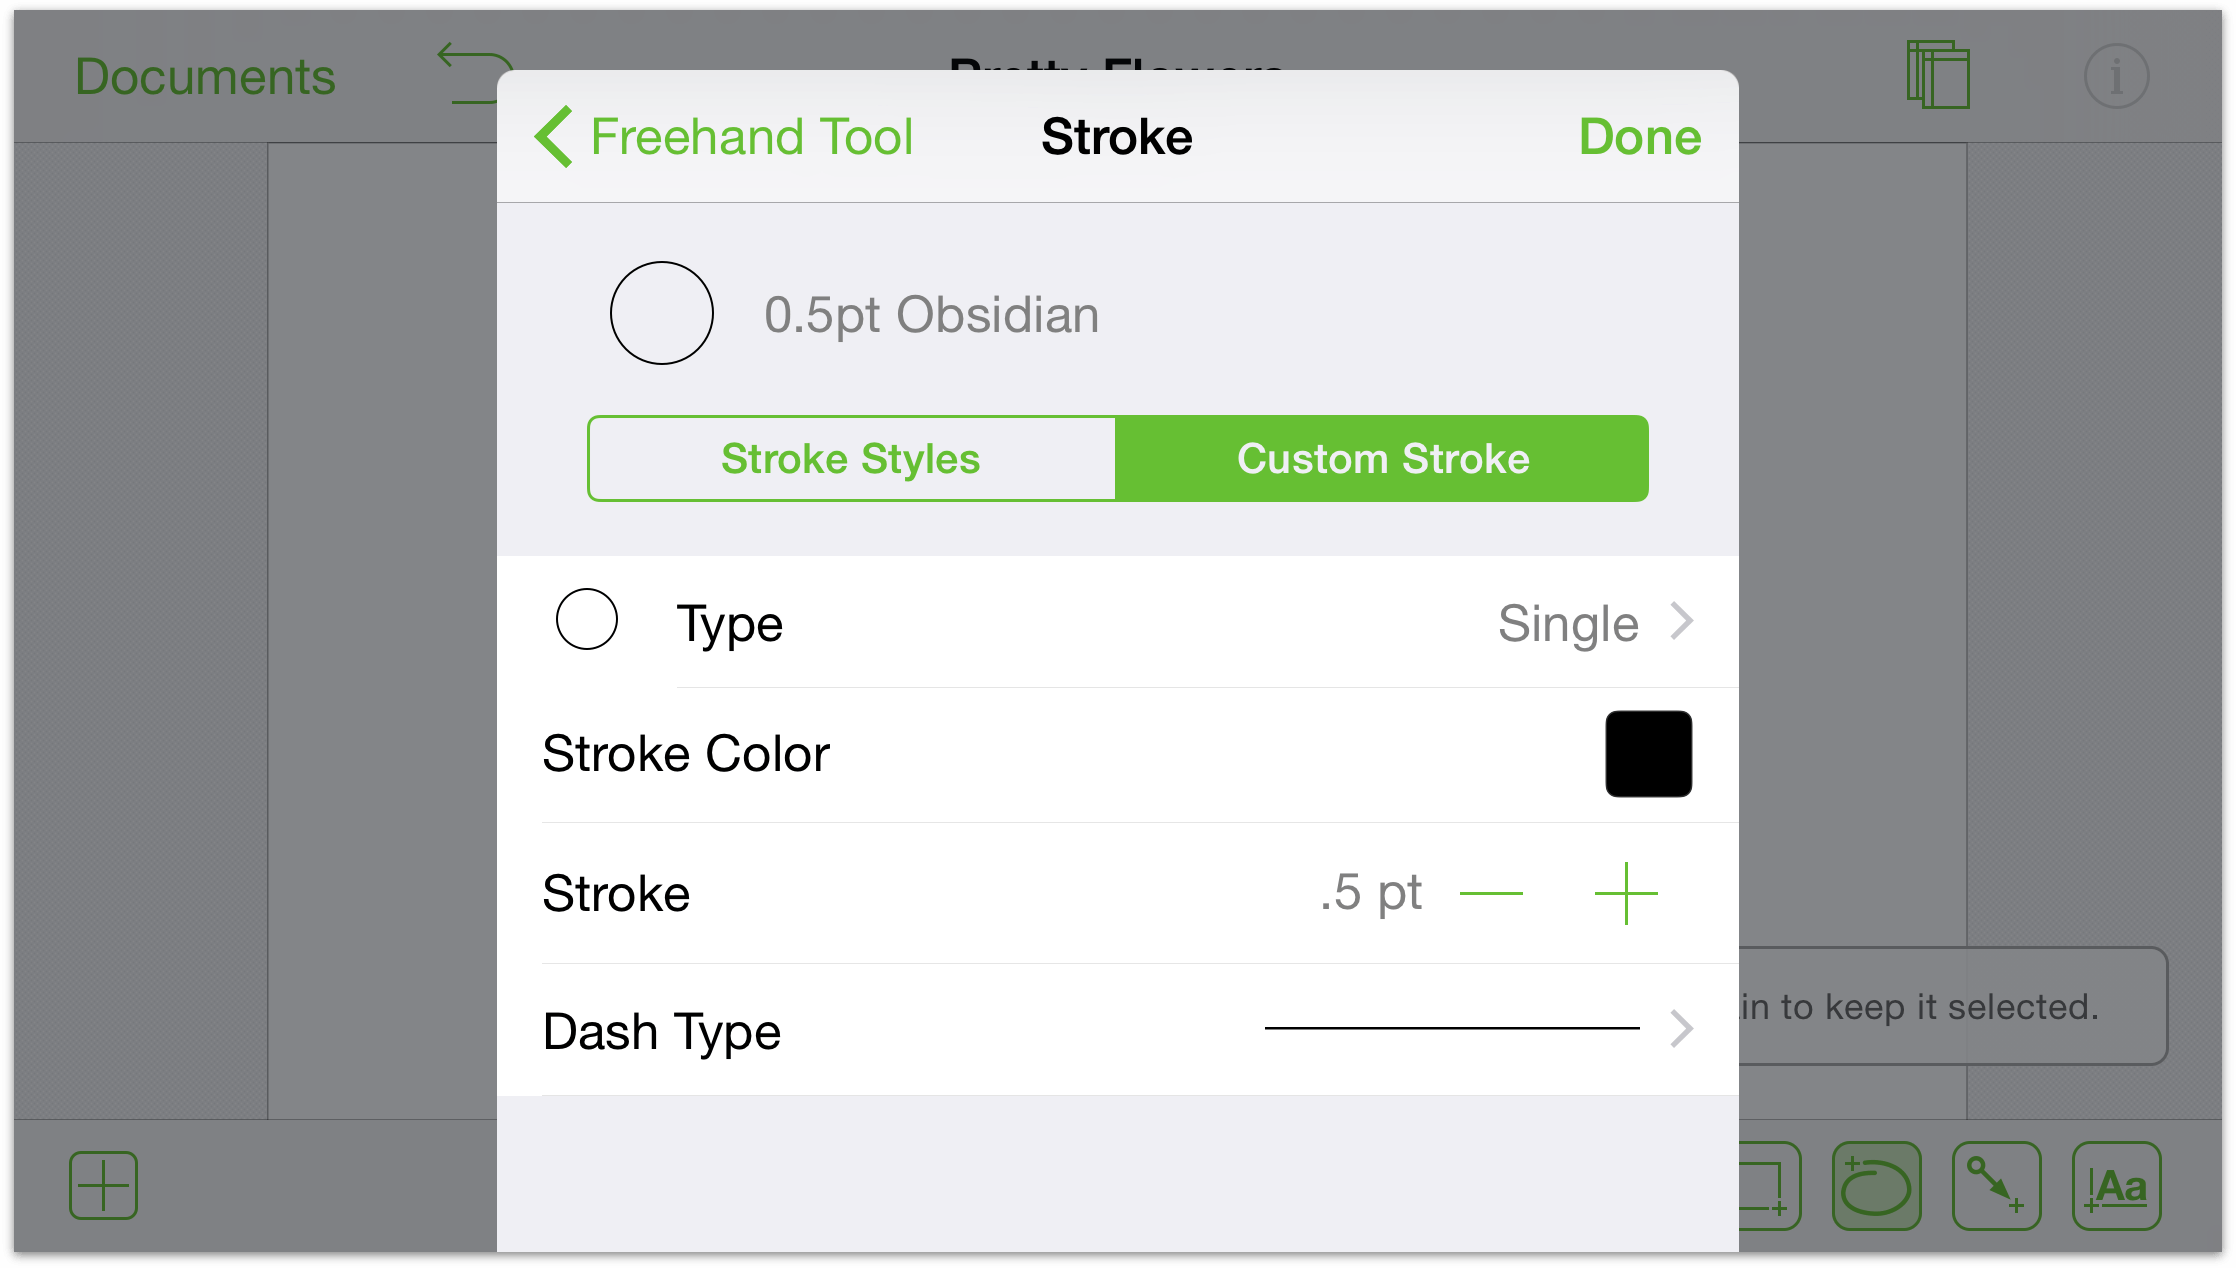 Some custom stroke styles